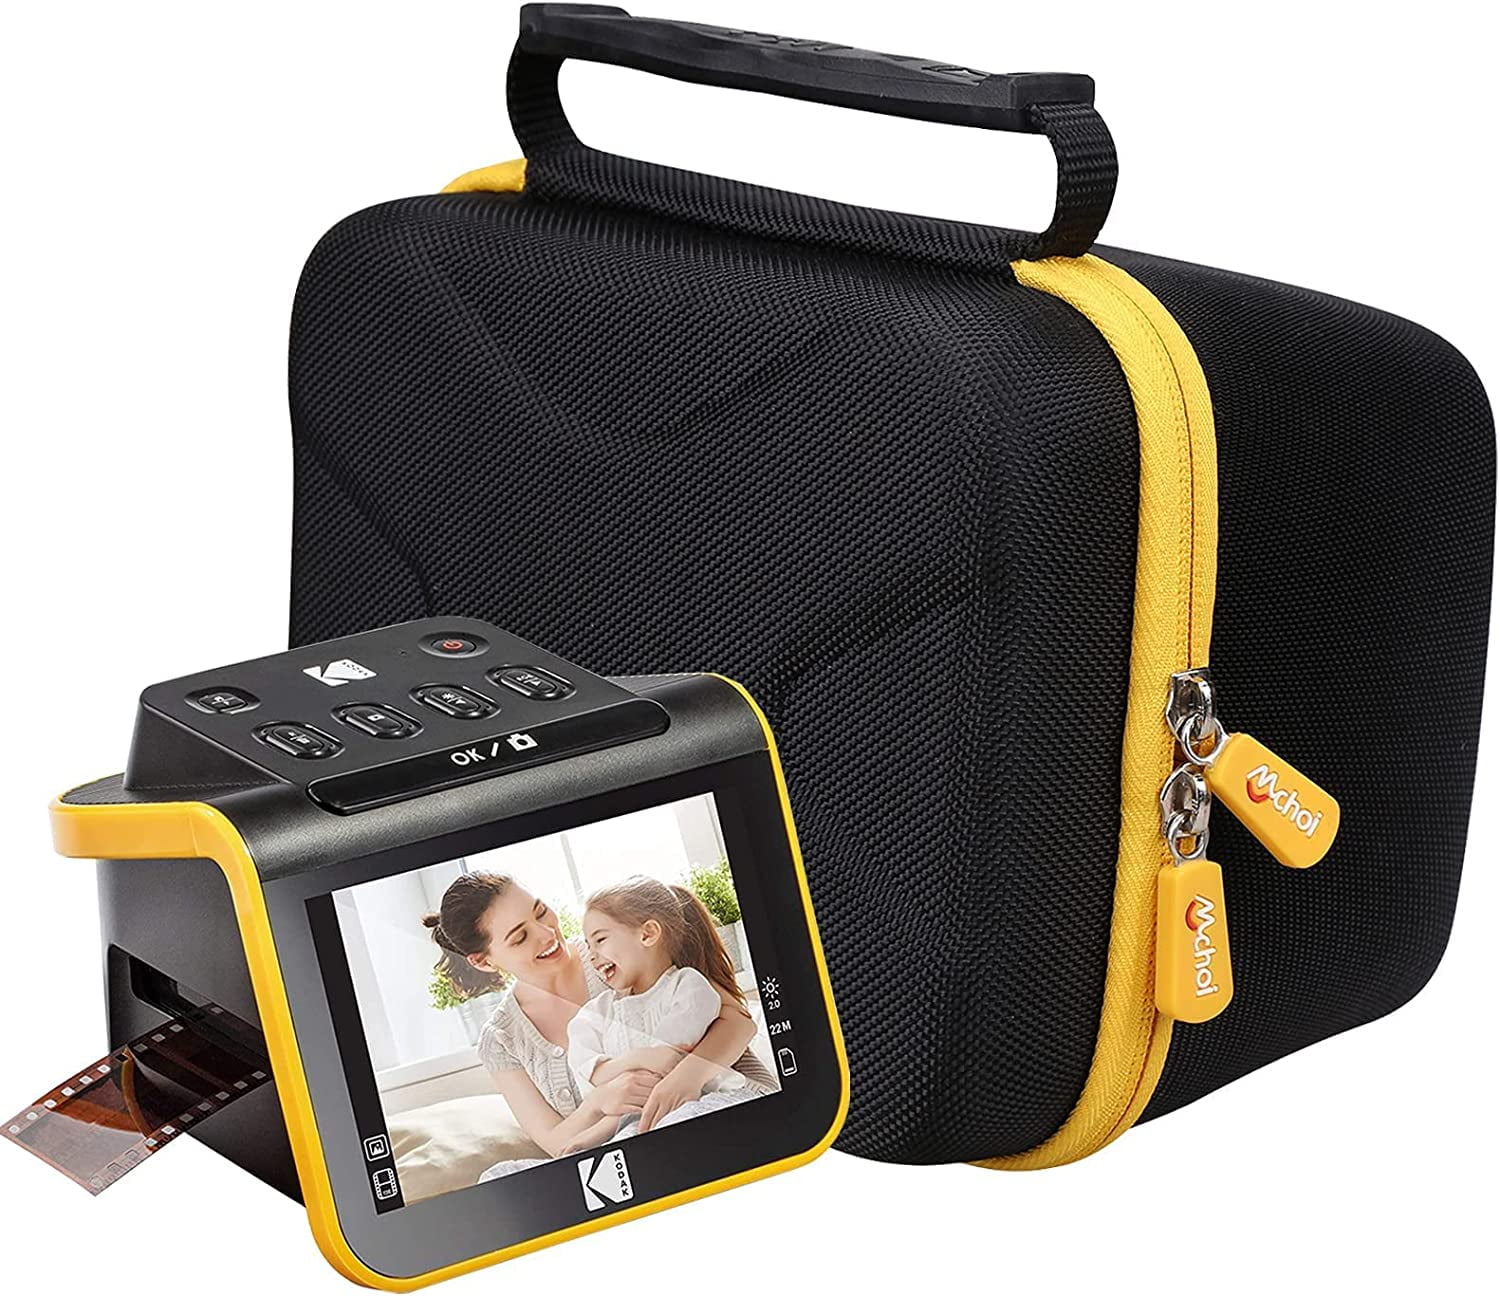 What's new at the Digital Media Stations? The Kodak Slide N Scan Digital Film  Scanner!